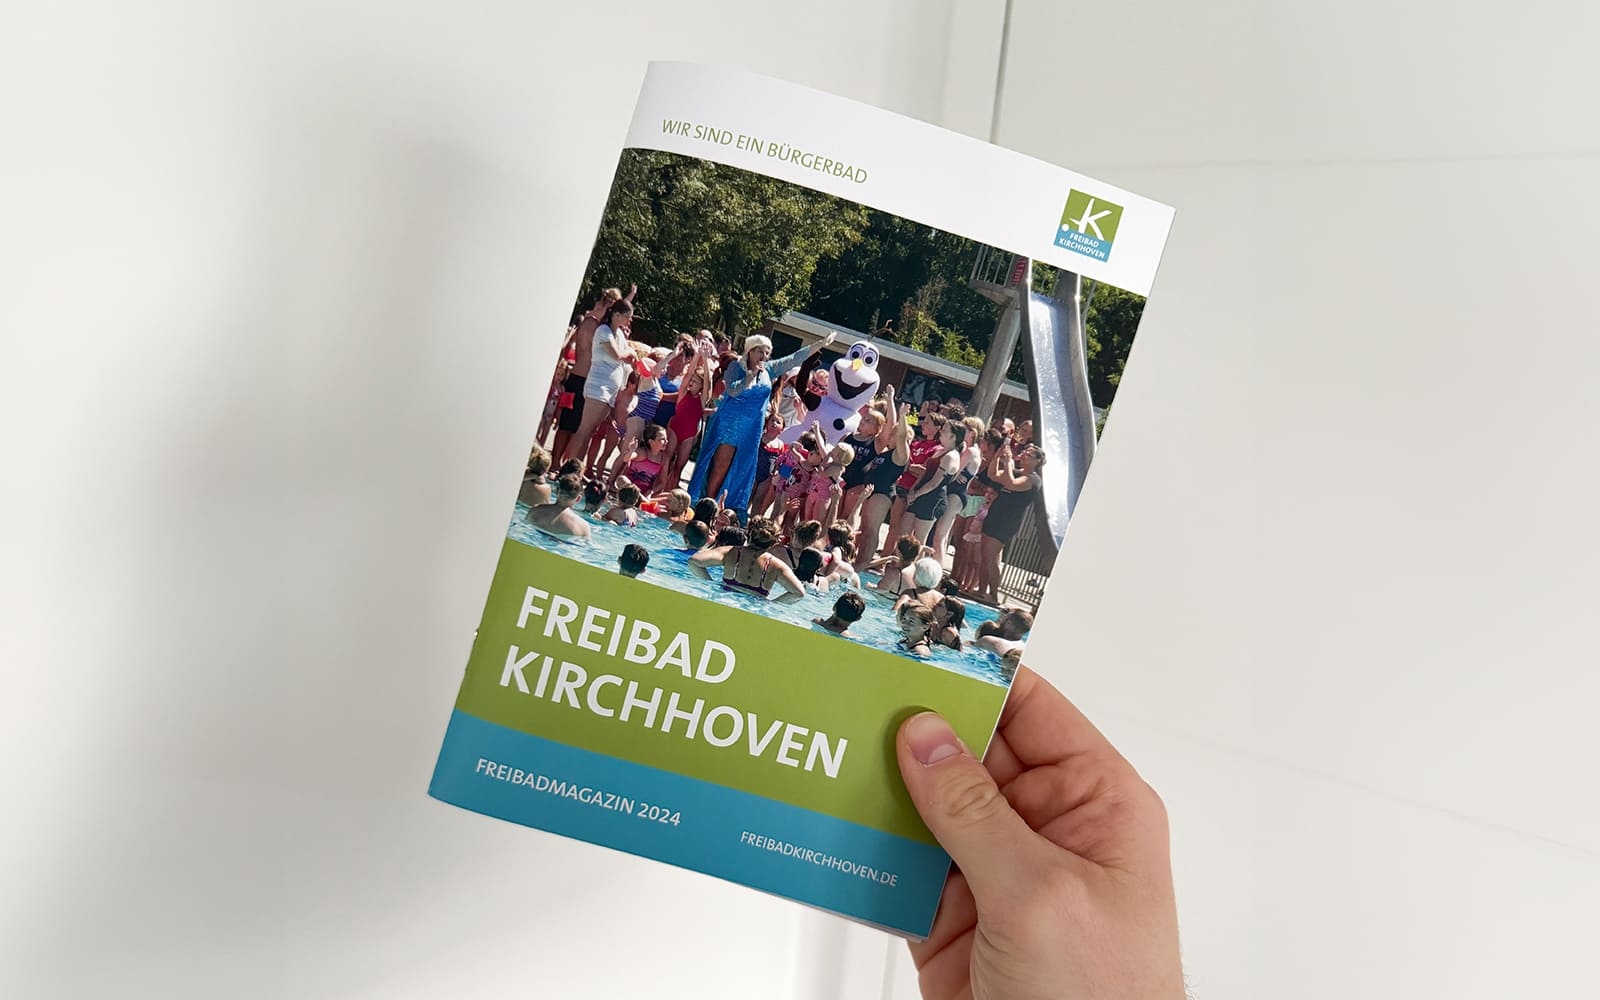 Freibad Kirchhoven: Freibadmagazin 2024 schlägt Wellen